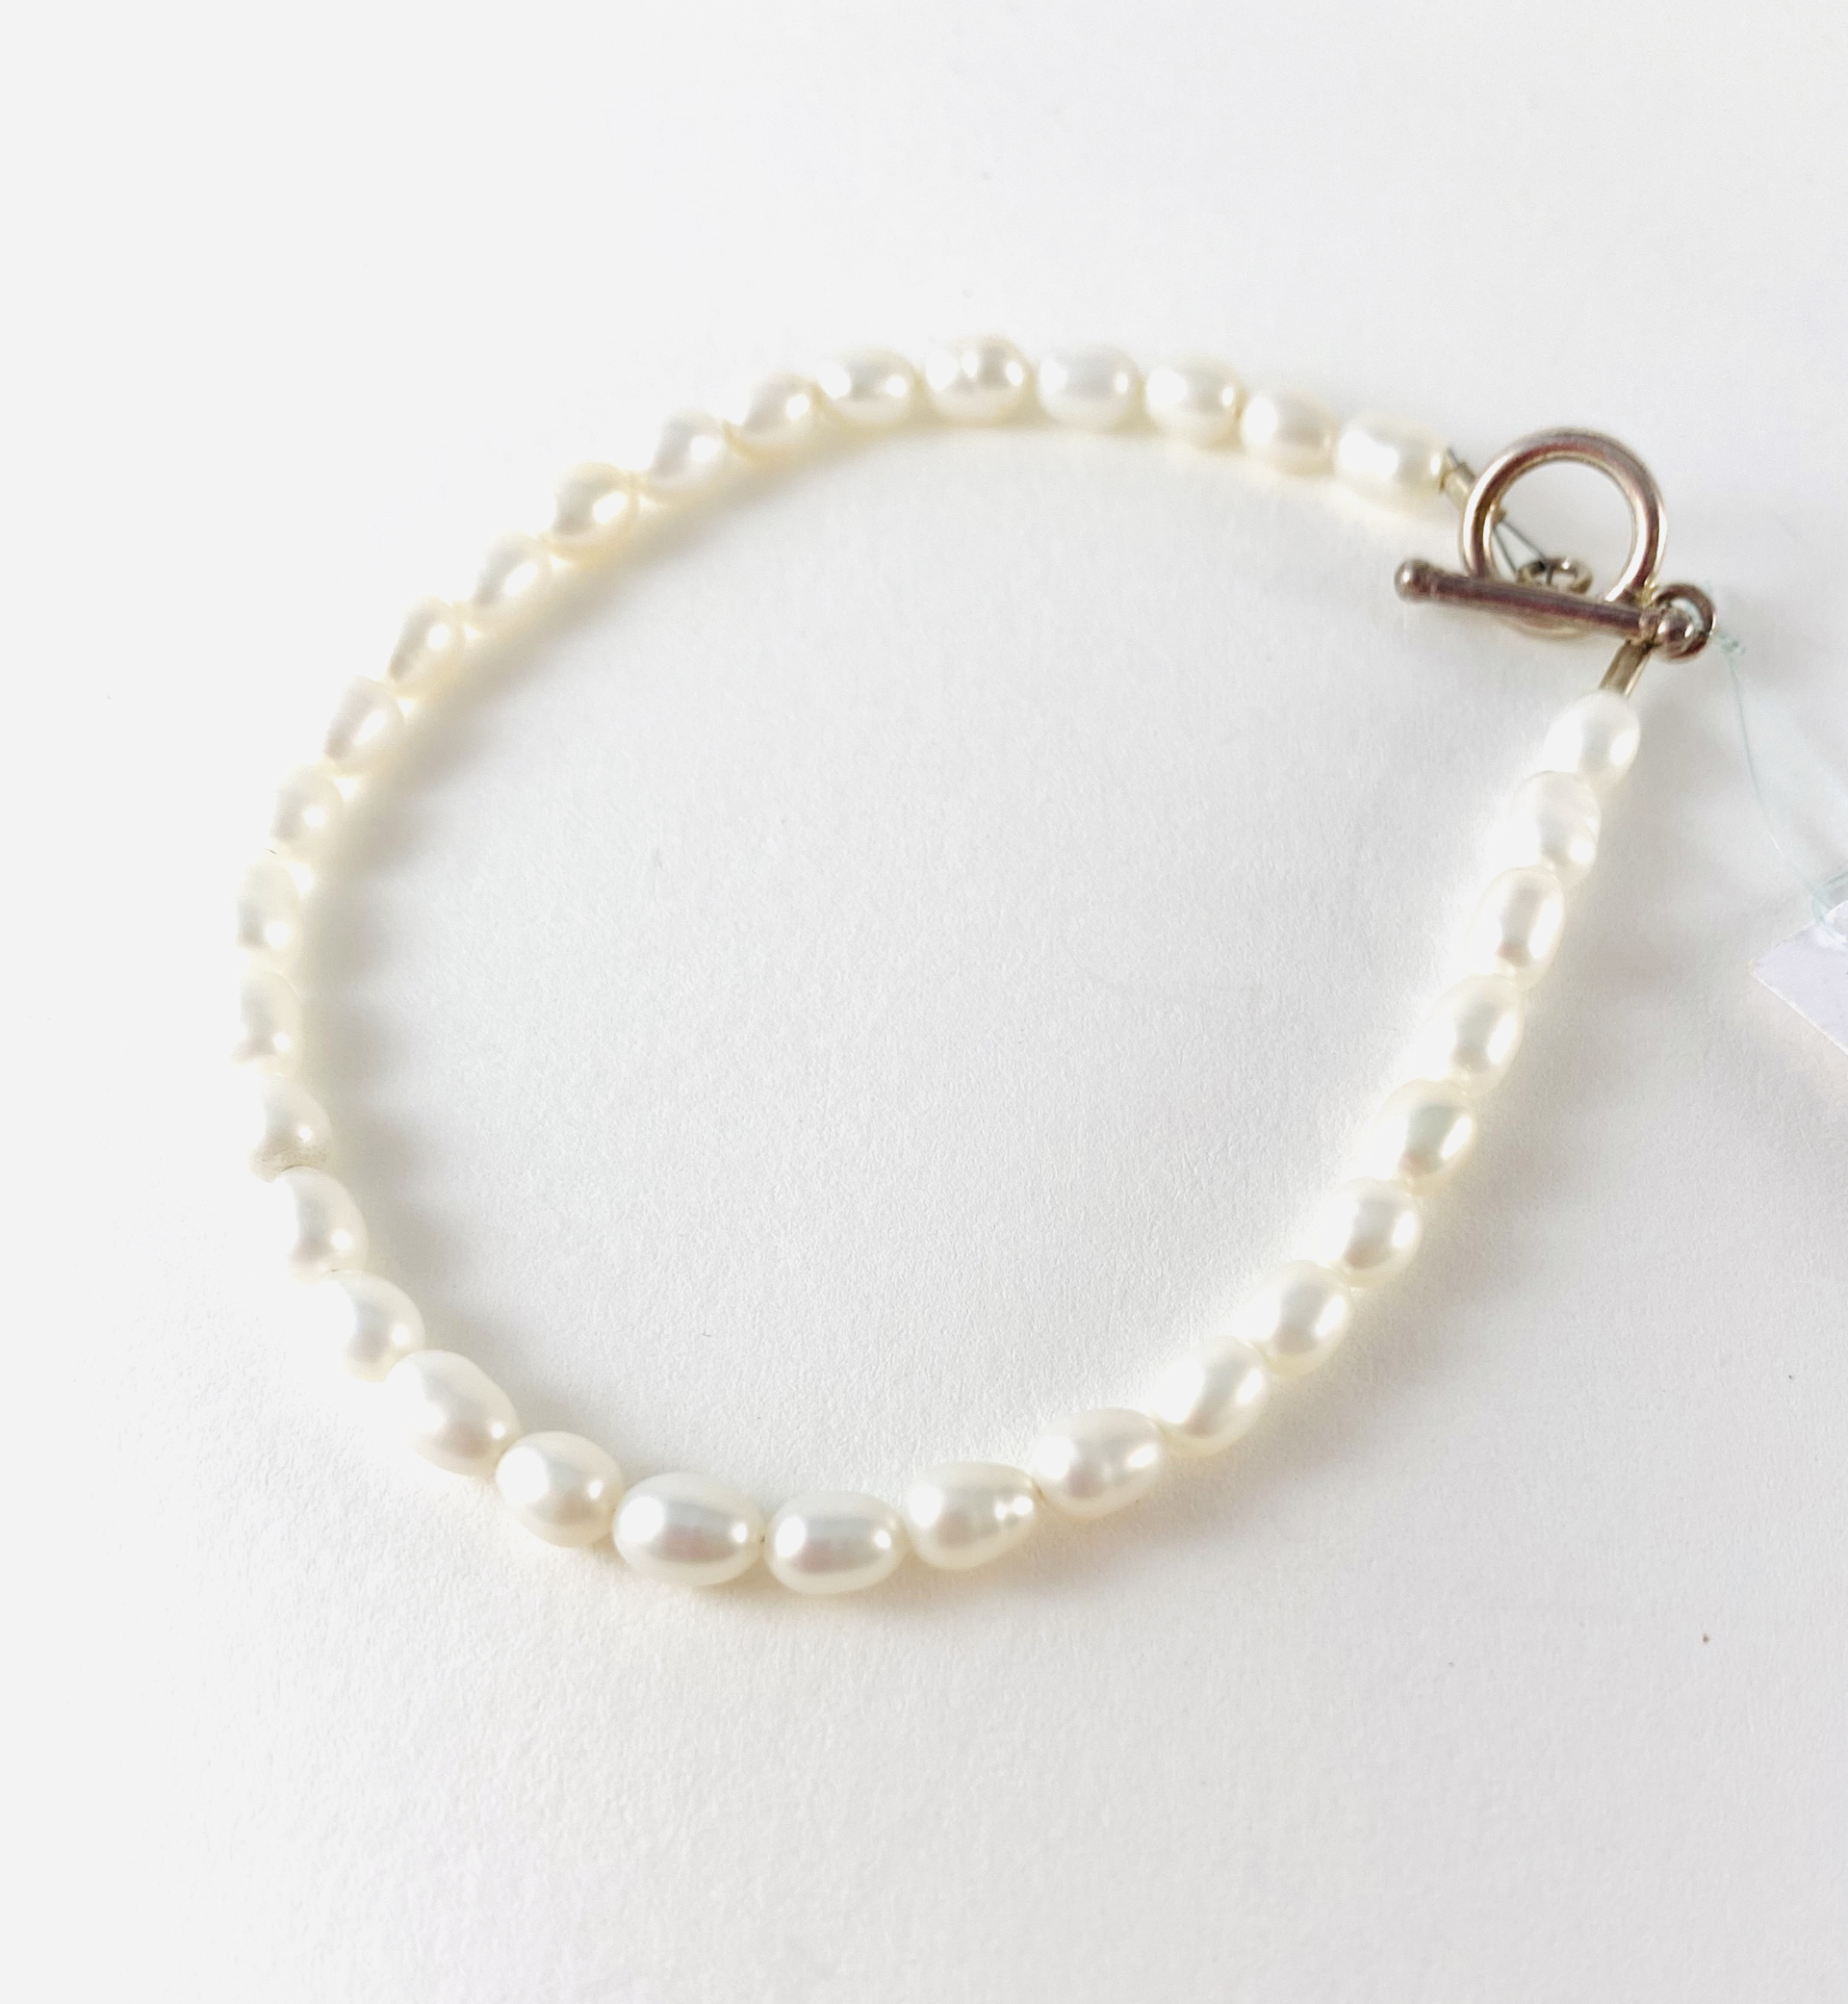 White Tiny Pearl Bracelet, toggle clasp P25 by Nance Trueworthy